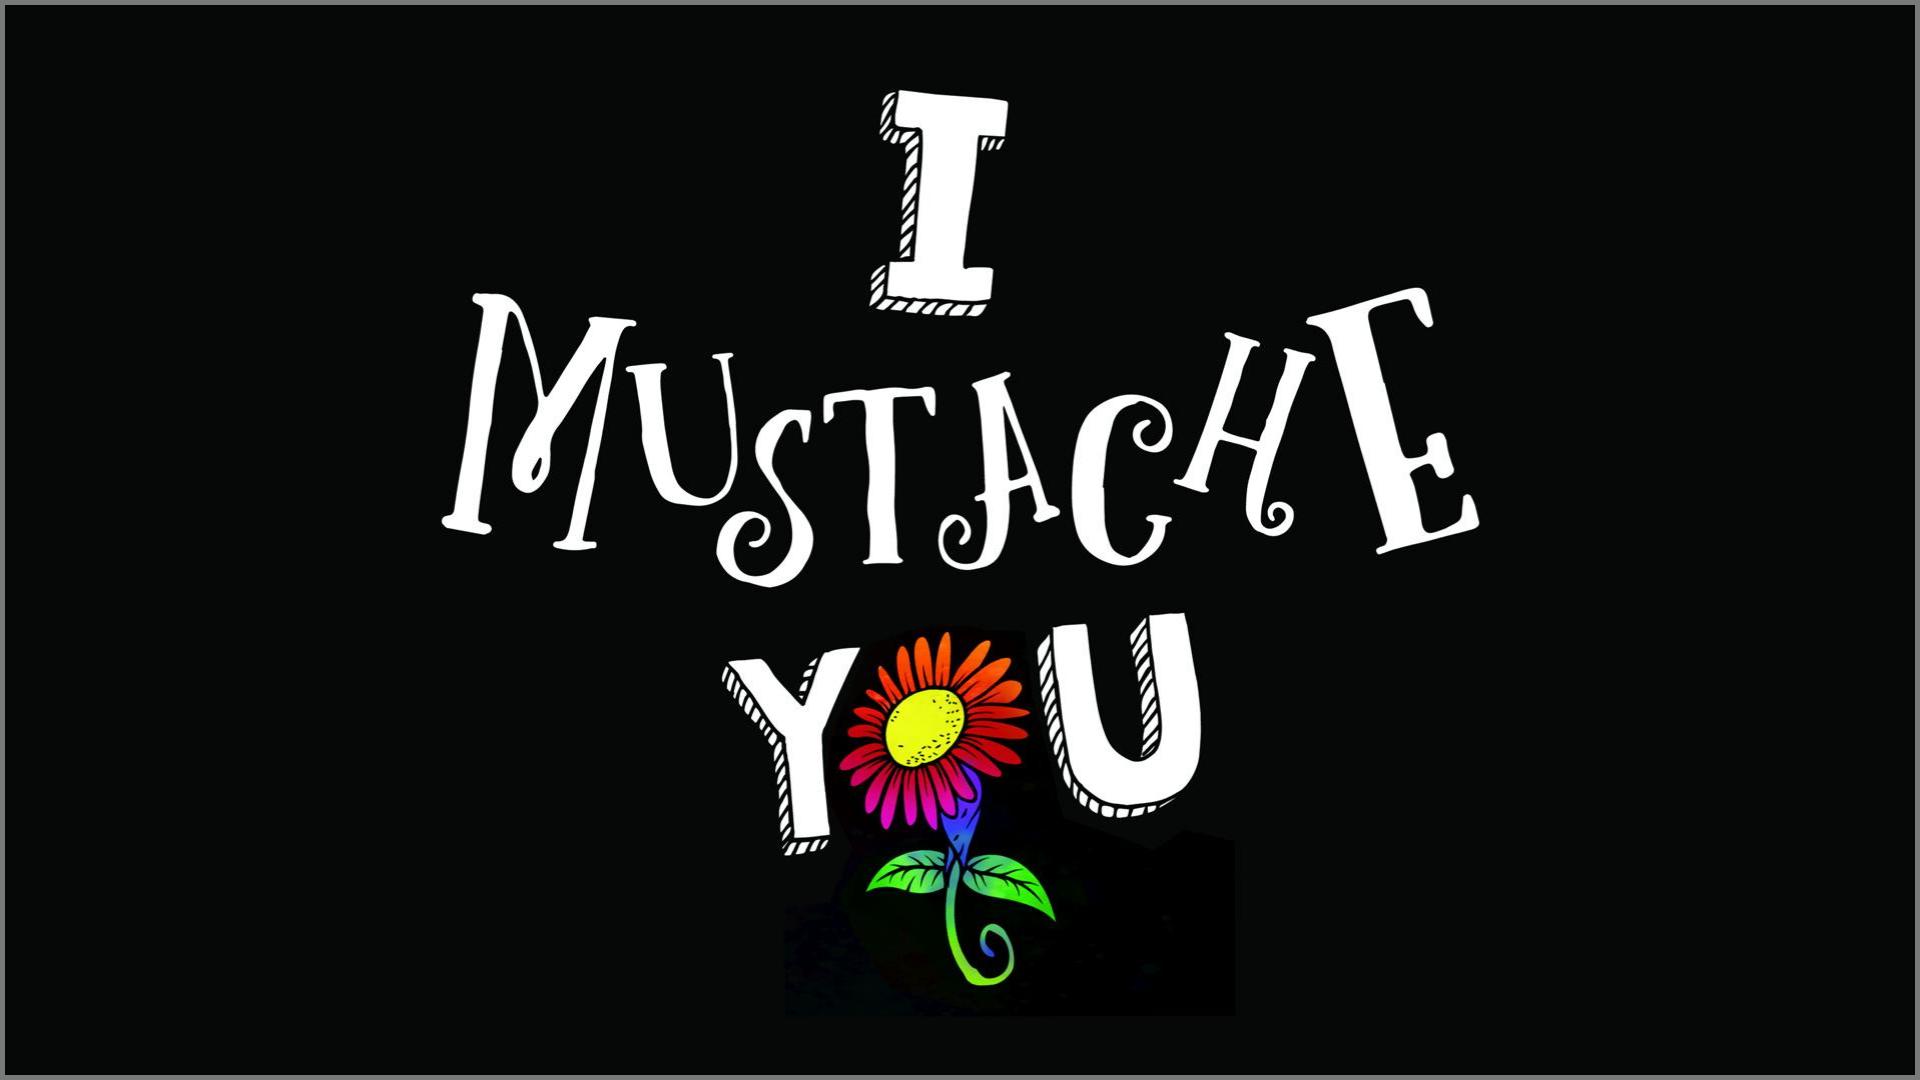 I Mustache You